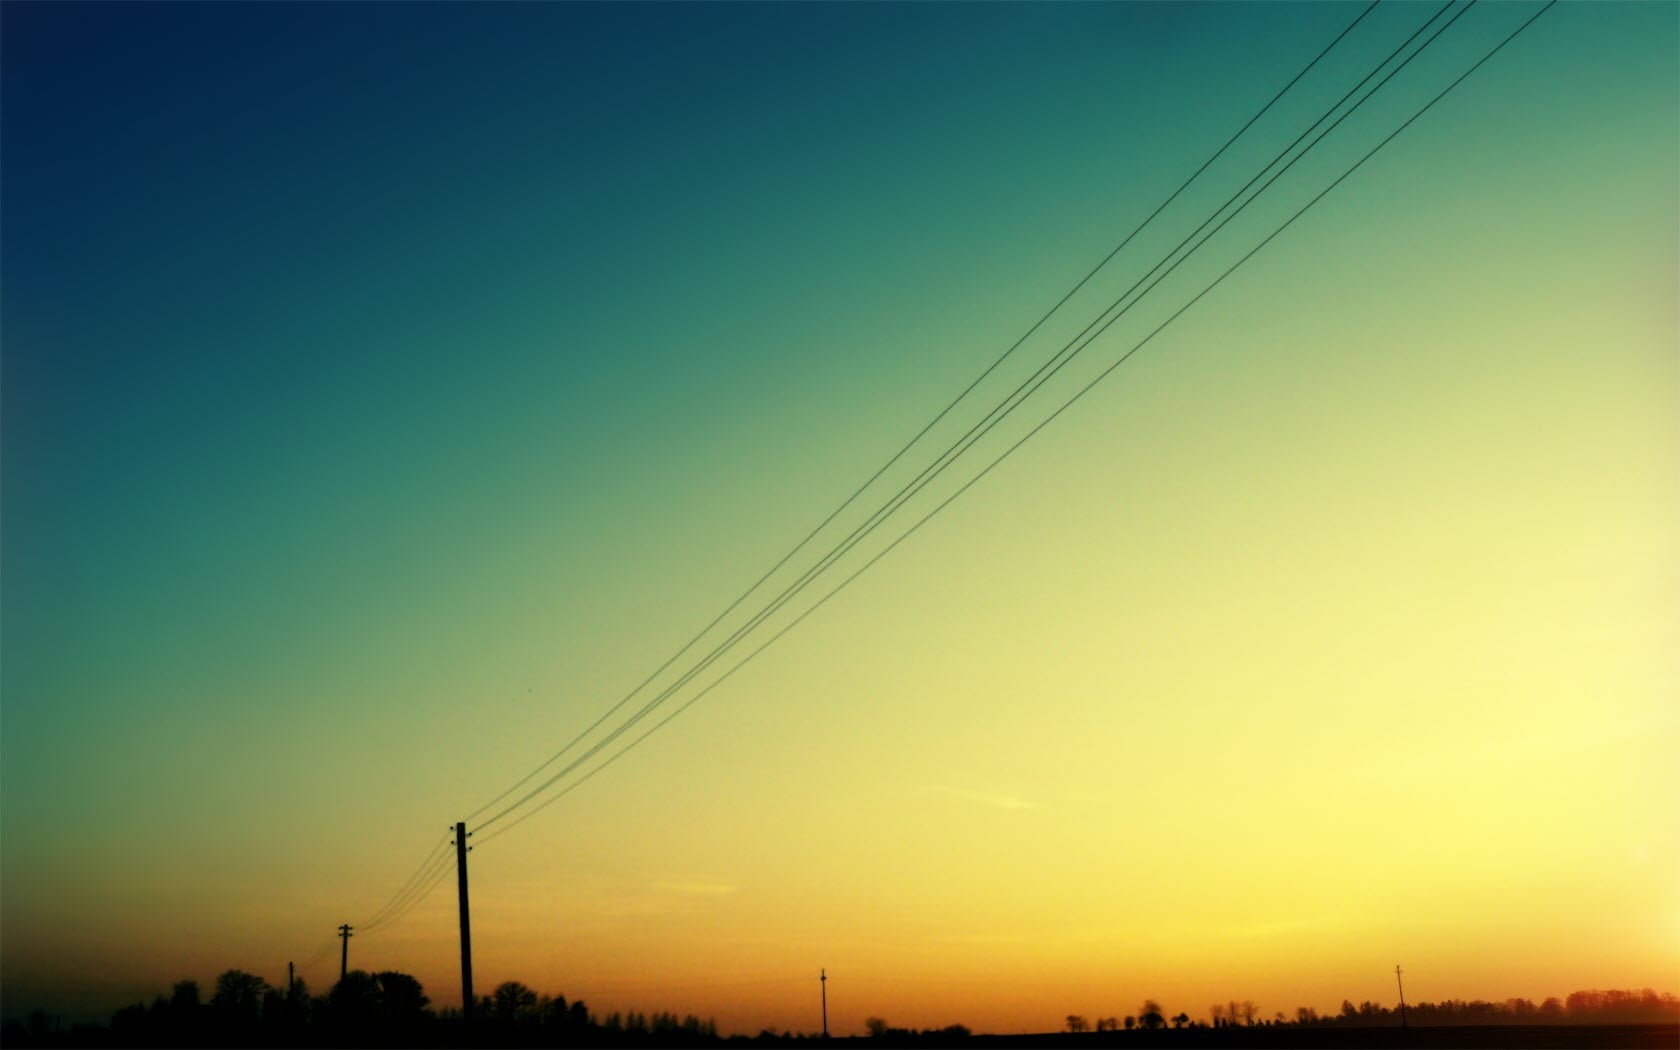 utility poste, sky, Vista, power lines, sunlight, sunset, cable